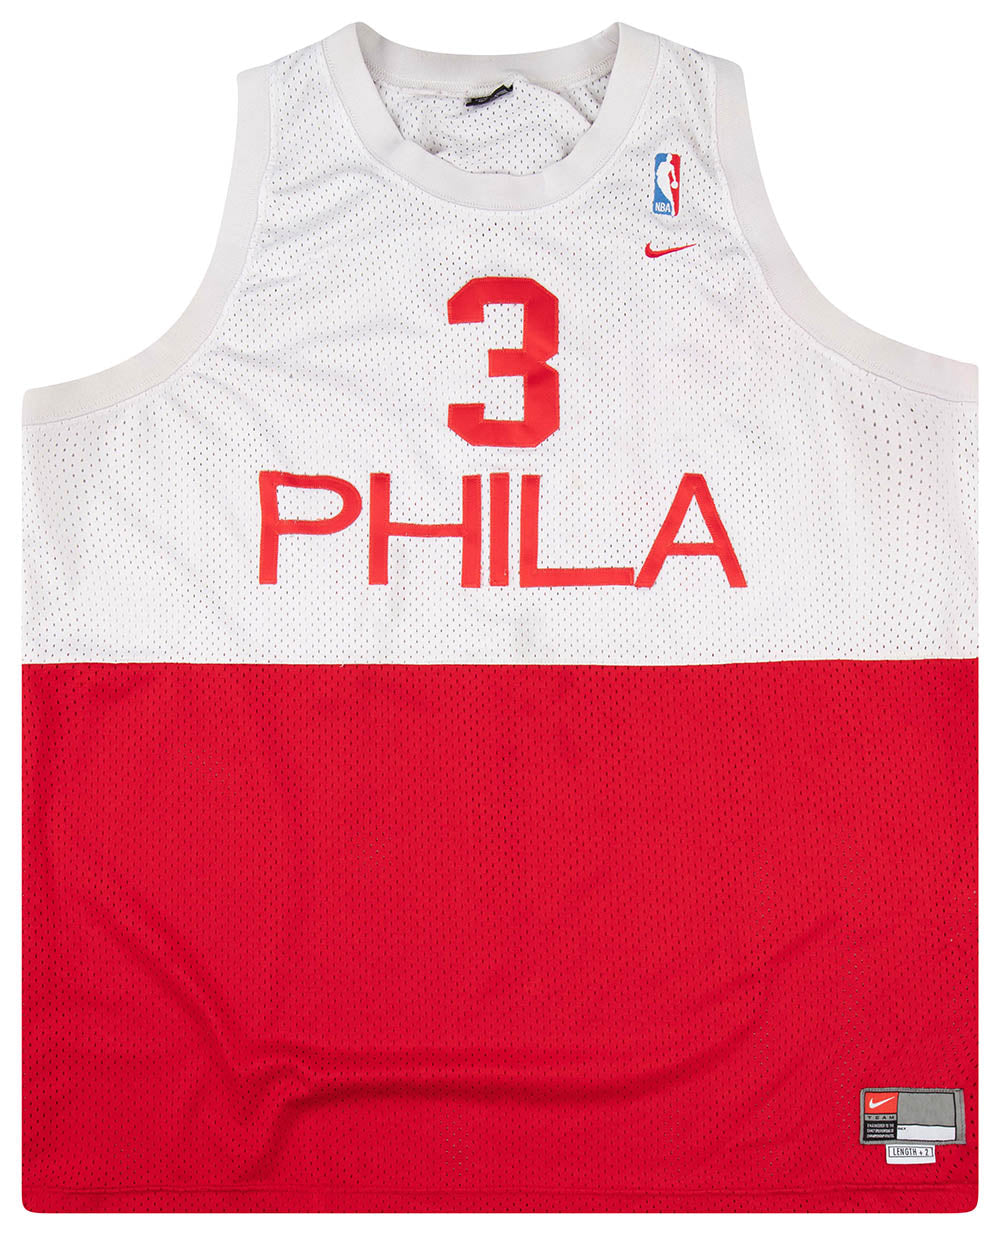 Nike Allen Iverson Philadelphia 76ers Throwback Jersey Red -  Hong Kong